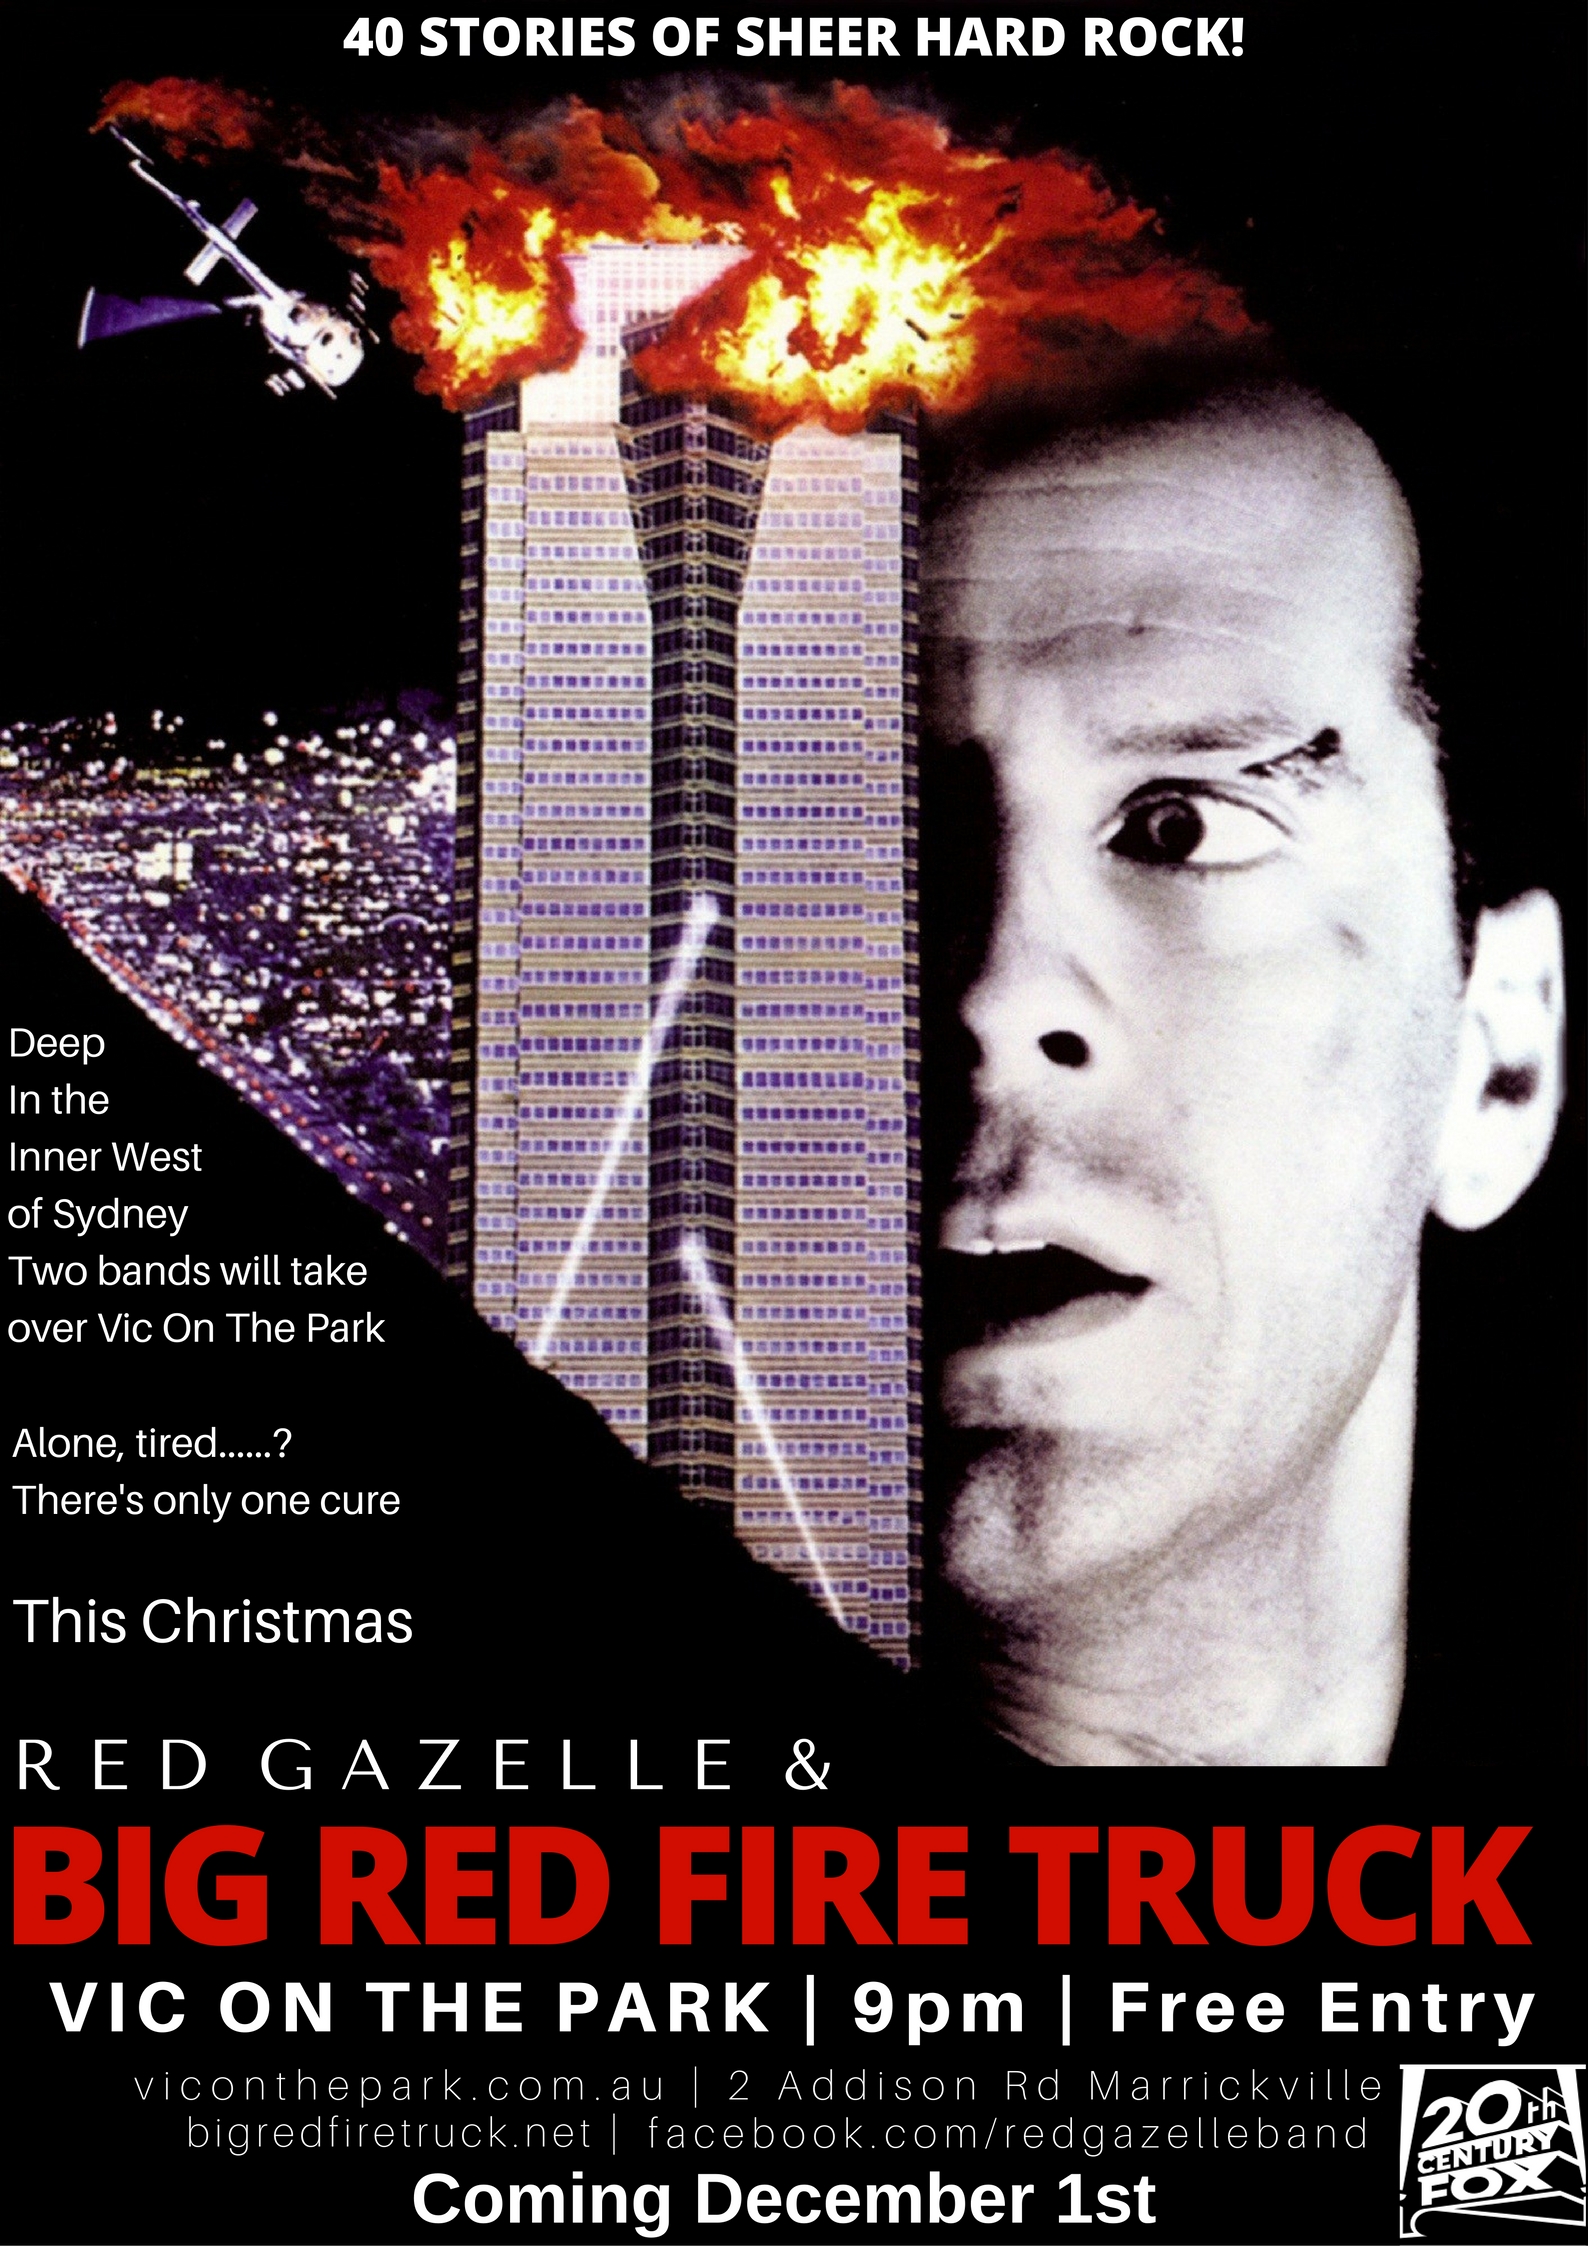 Big Red Fire Truck&Red Gazelle.jpg